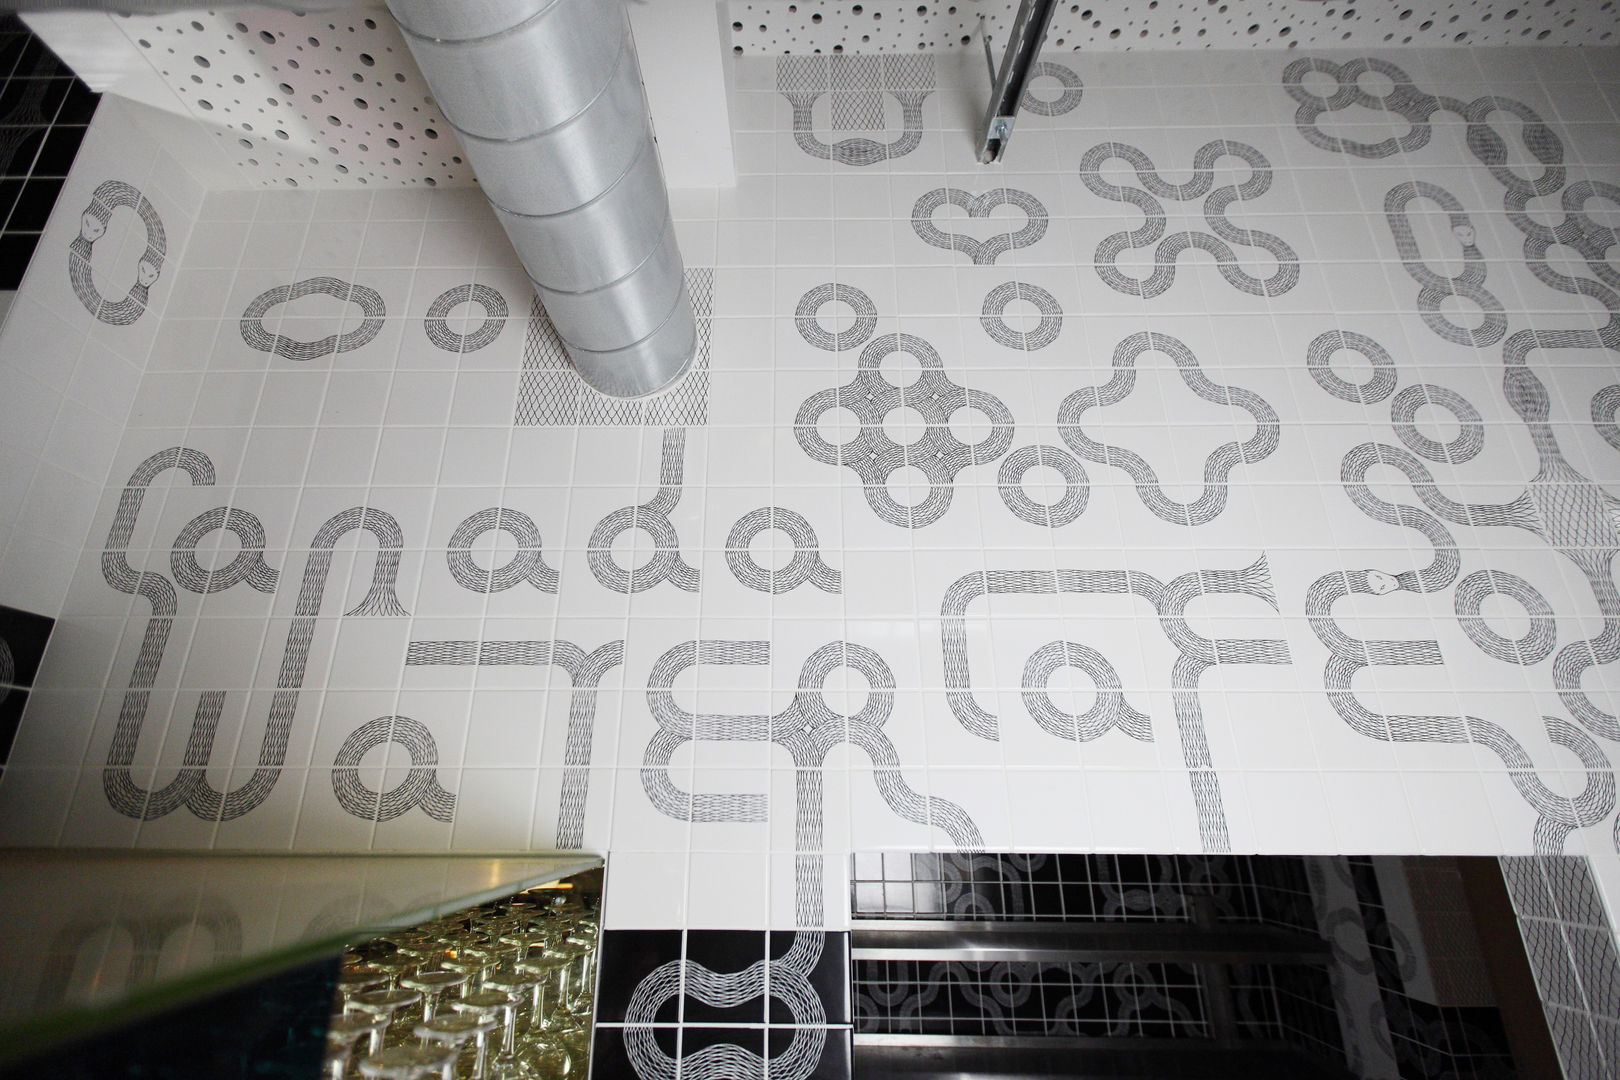 Ouroboros Tile installation at Canada Water Cafe, London Peter Ibruegger Studio Bedrijfsruimten Gastronomie